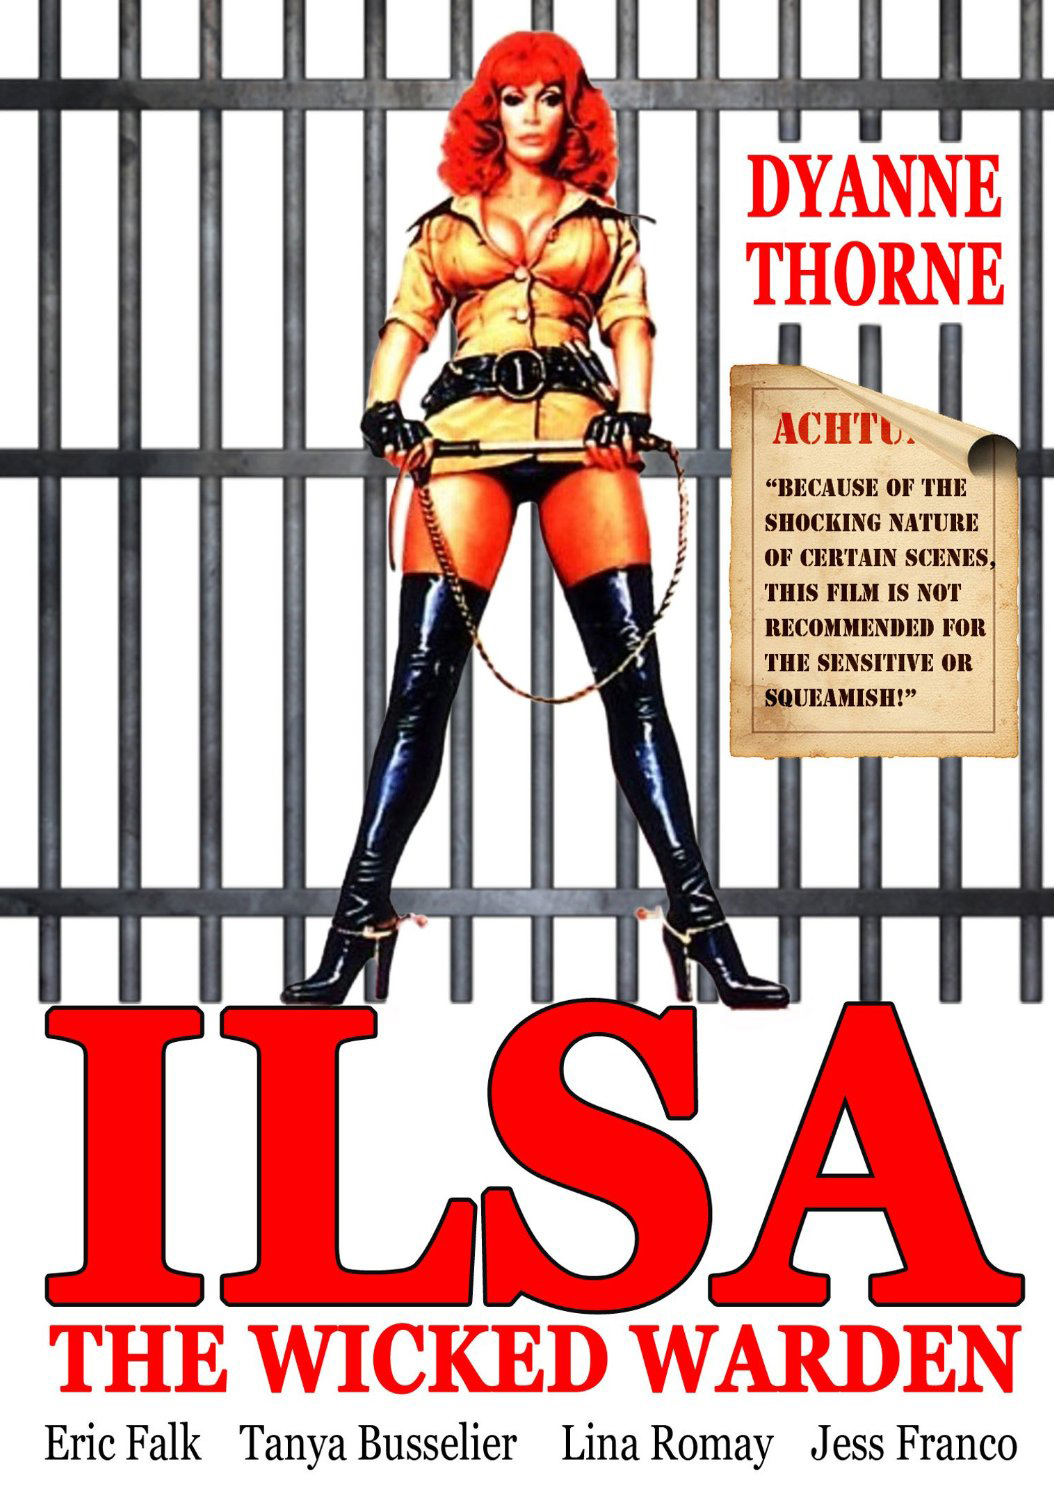 Ilsa, the Wicked Warden 1977